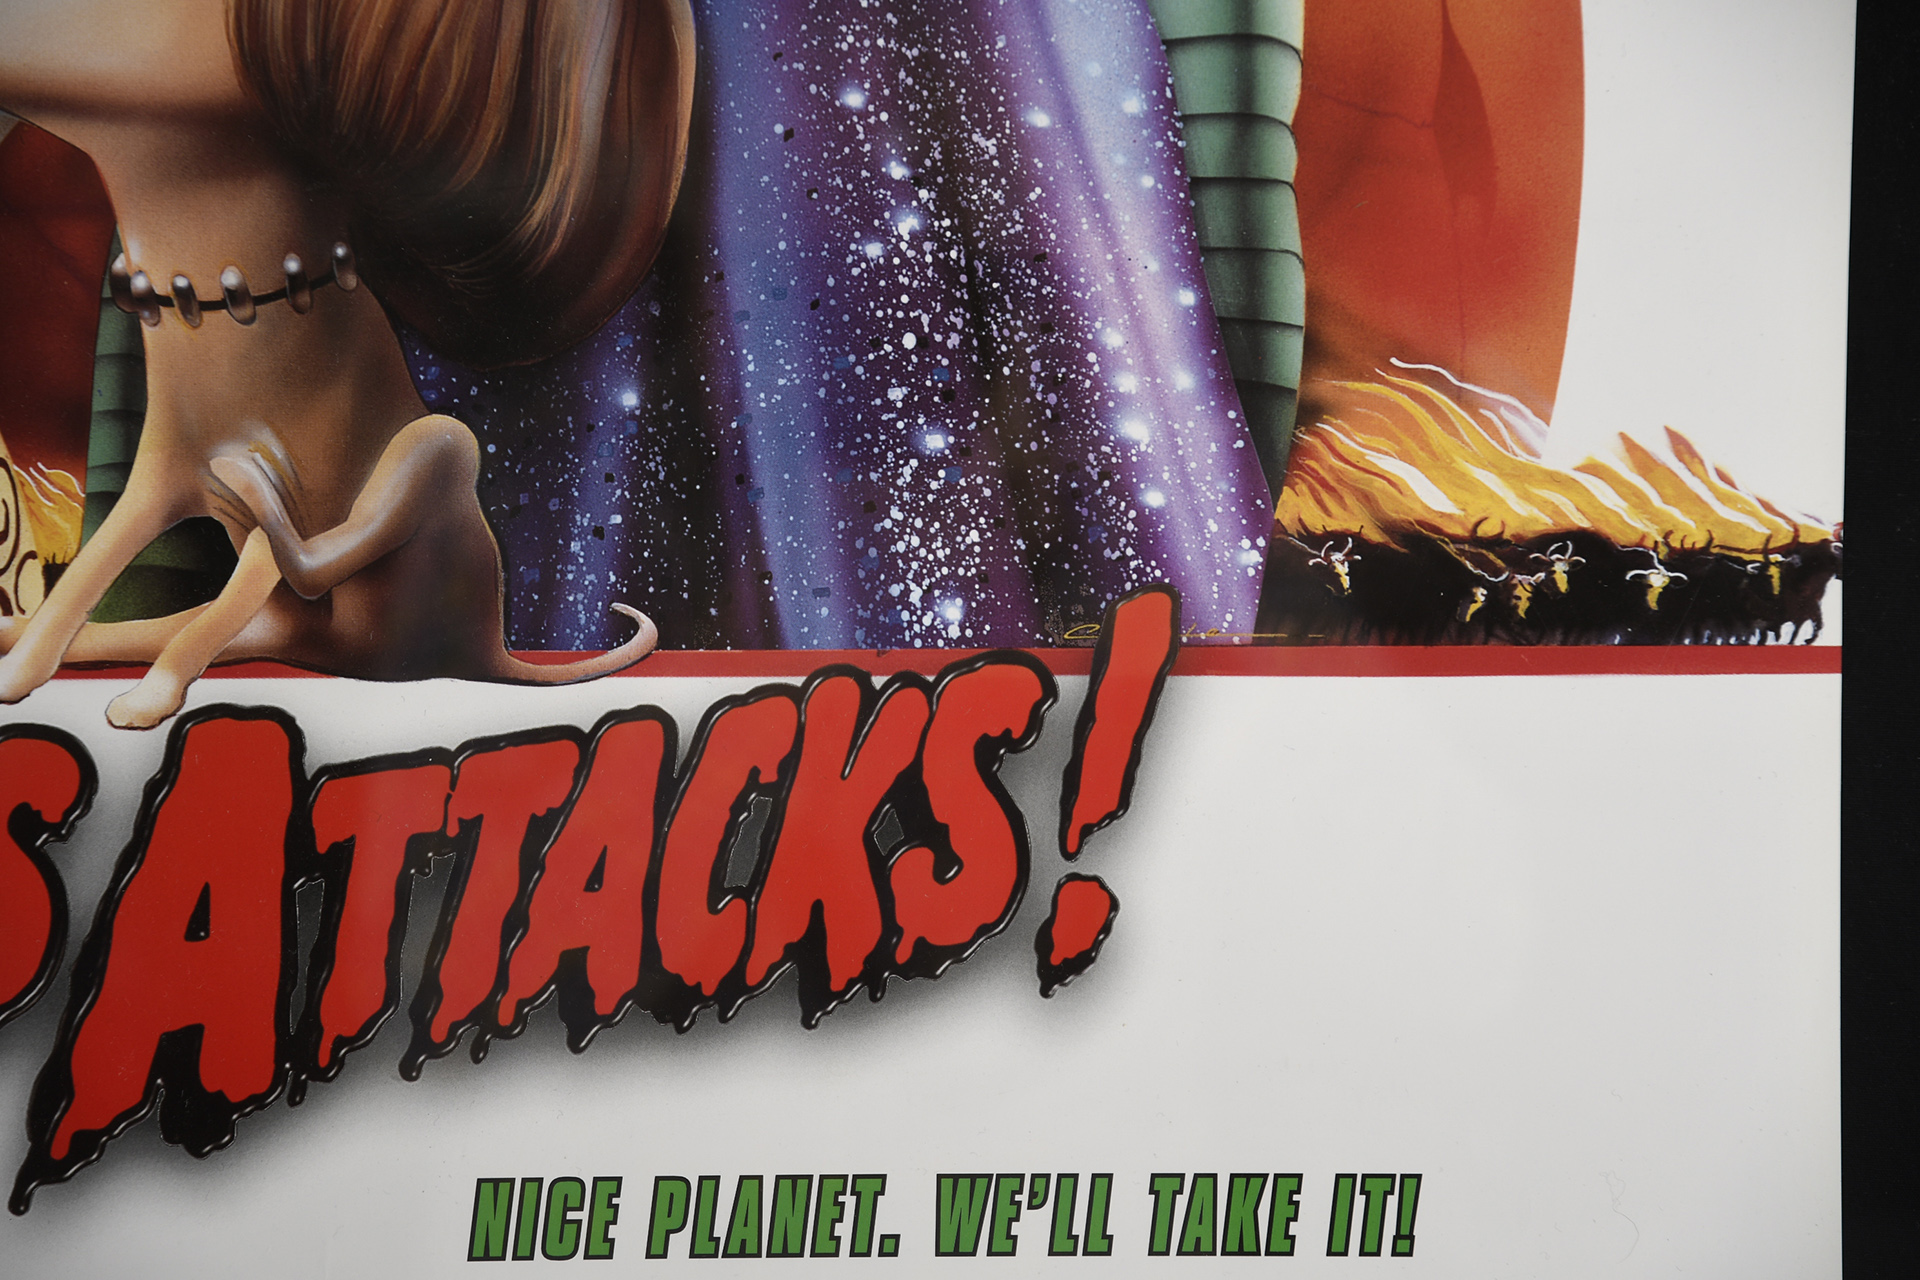 Mars Attacks!"" Cinema Poster - Image 5 of 10